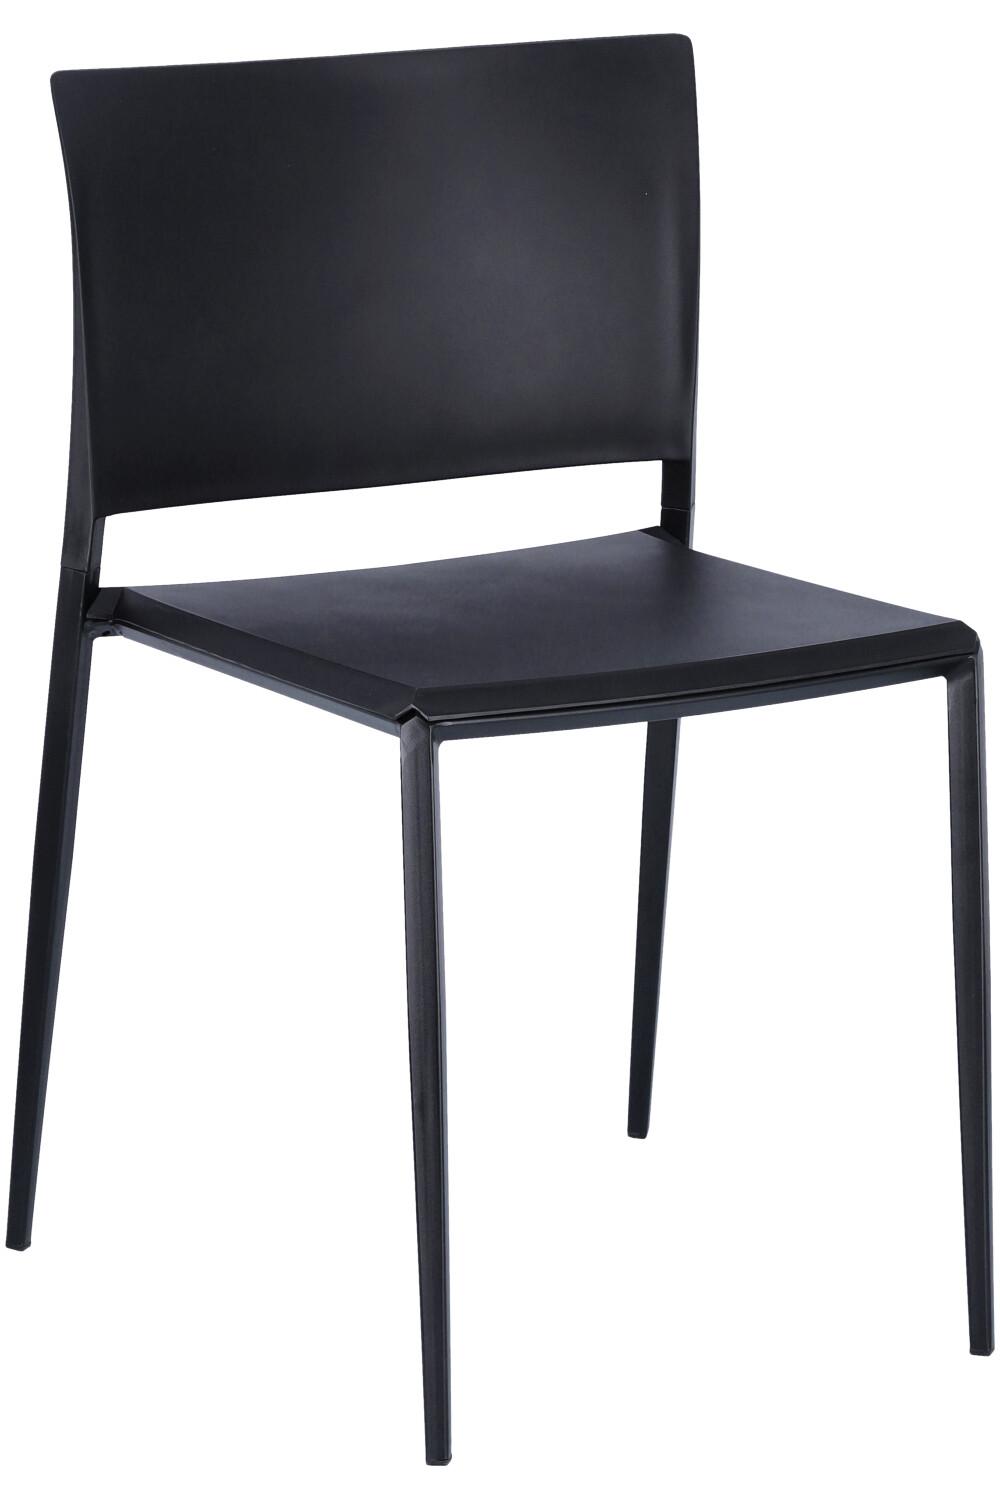 chair Barlin